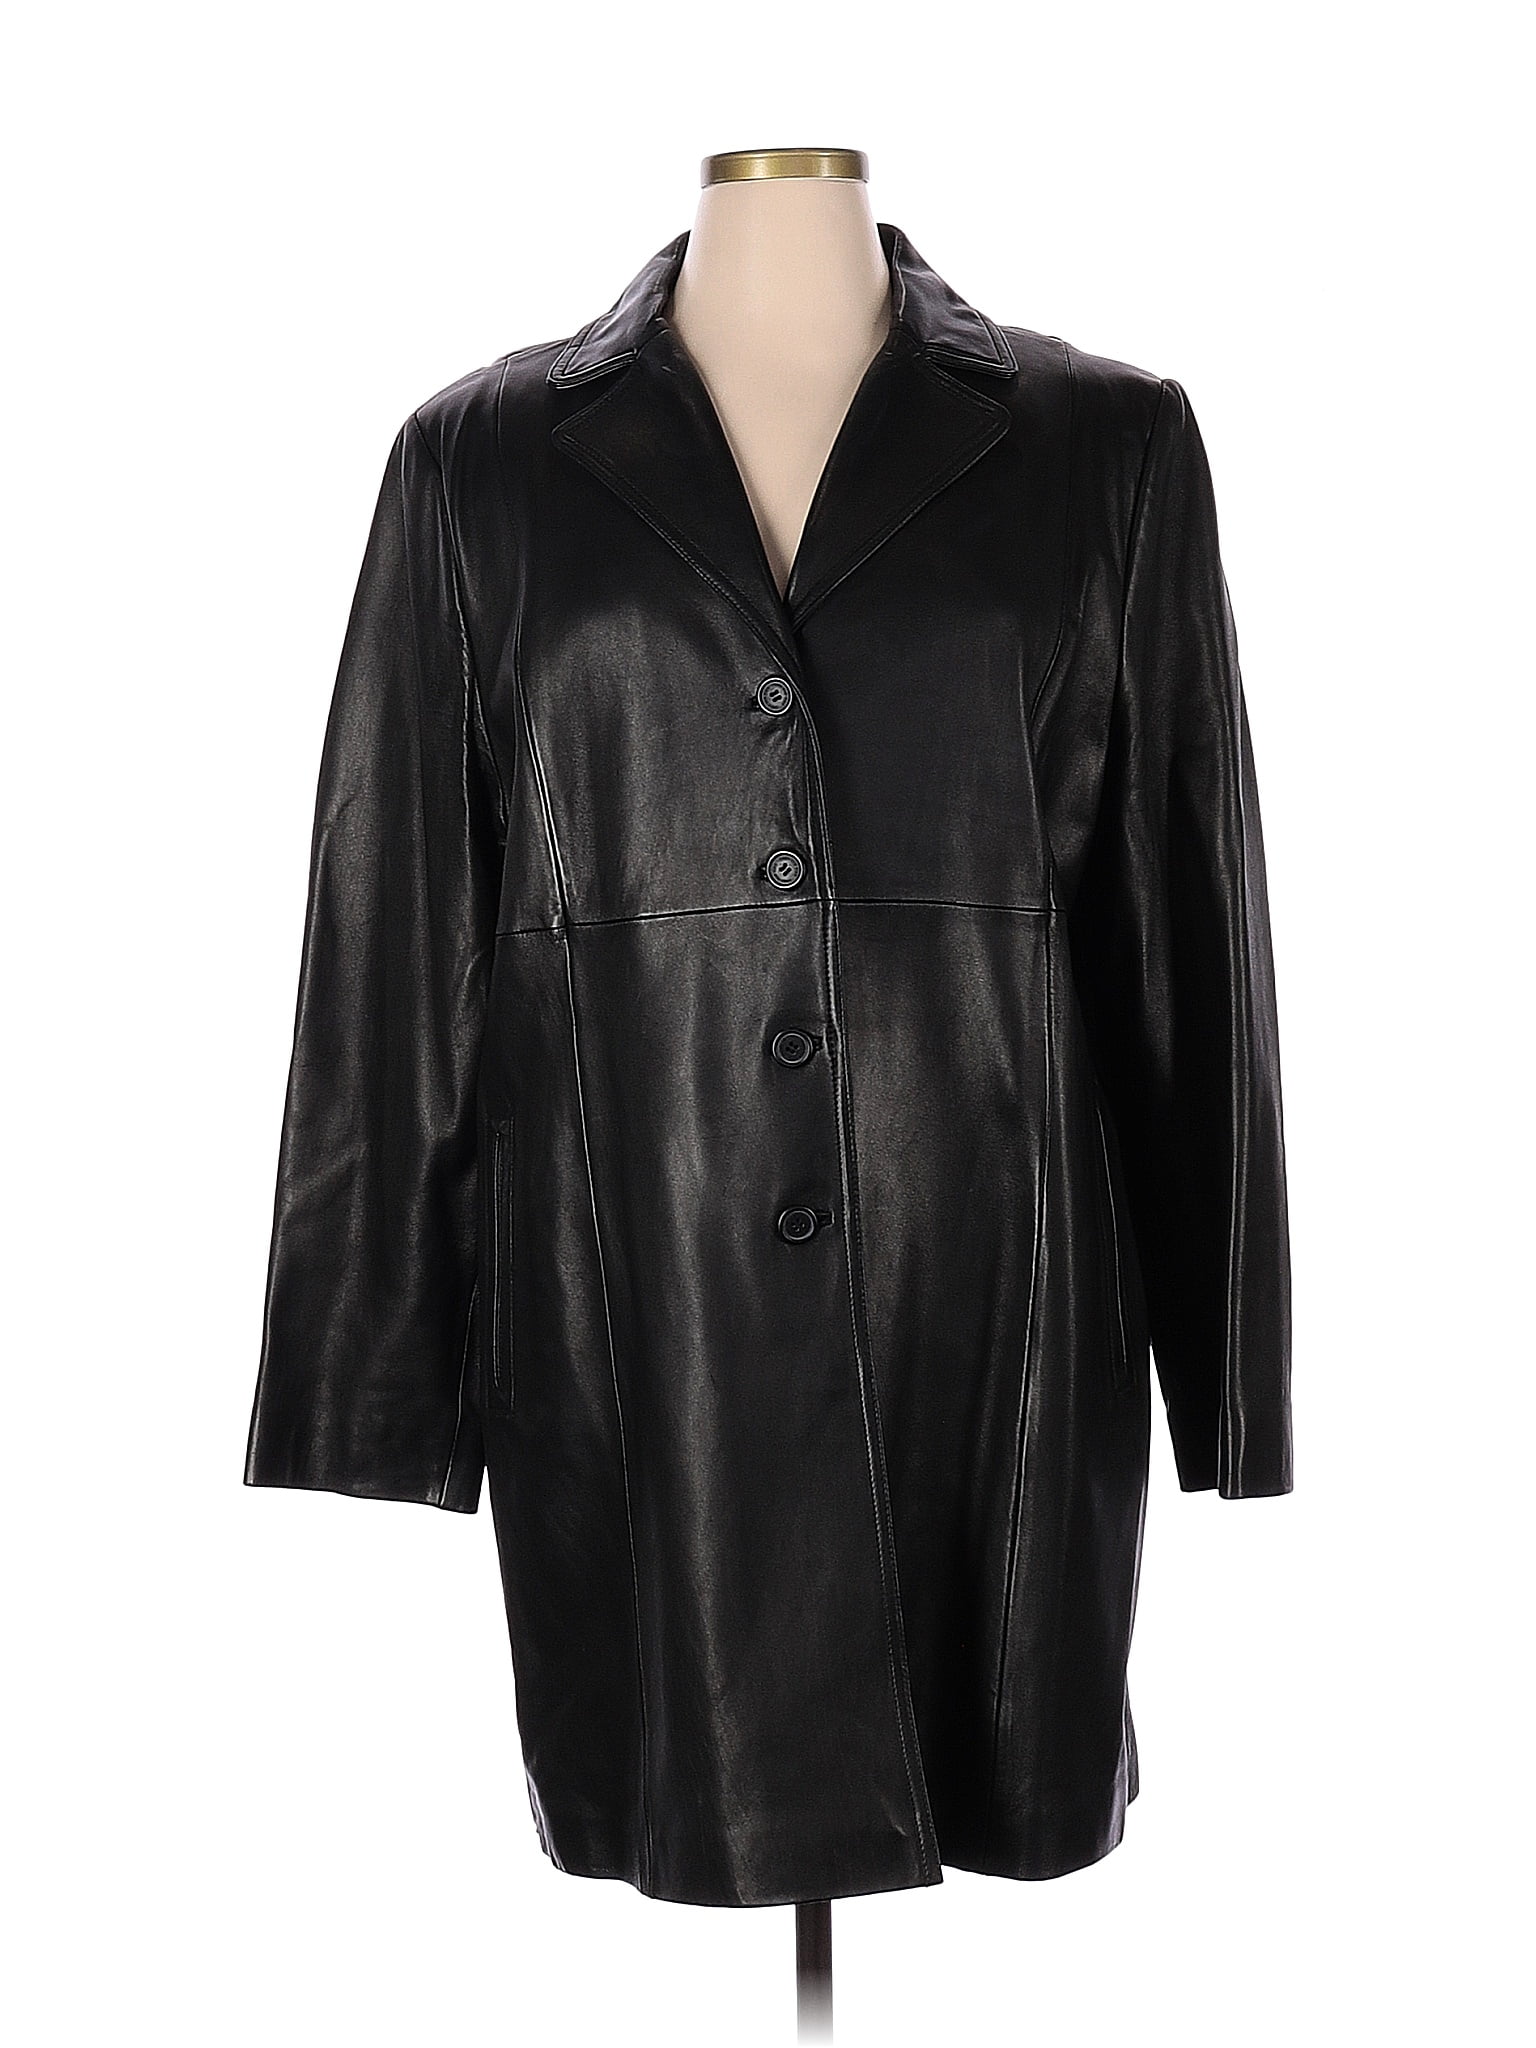 Jones New York 100% Leather Solid Black Leather Jacket Size 1X (Plus ...